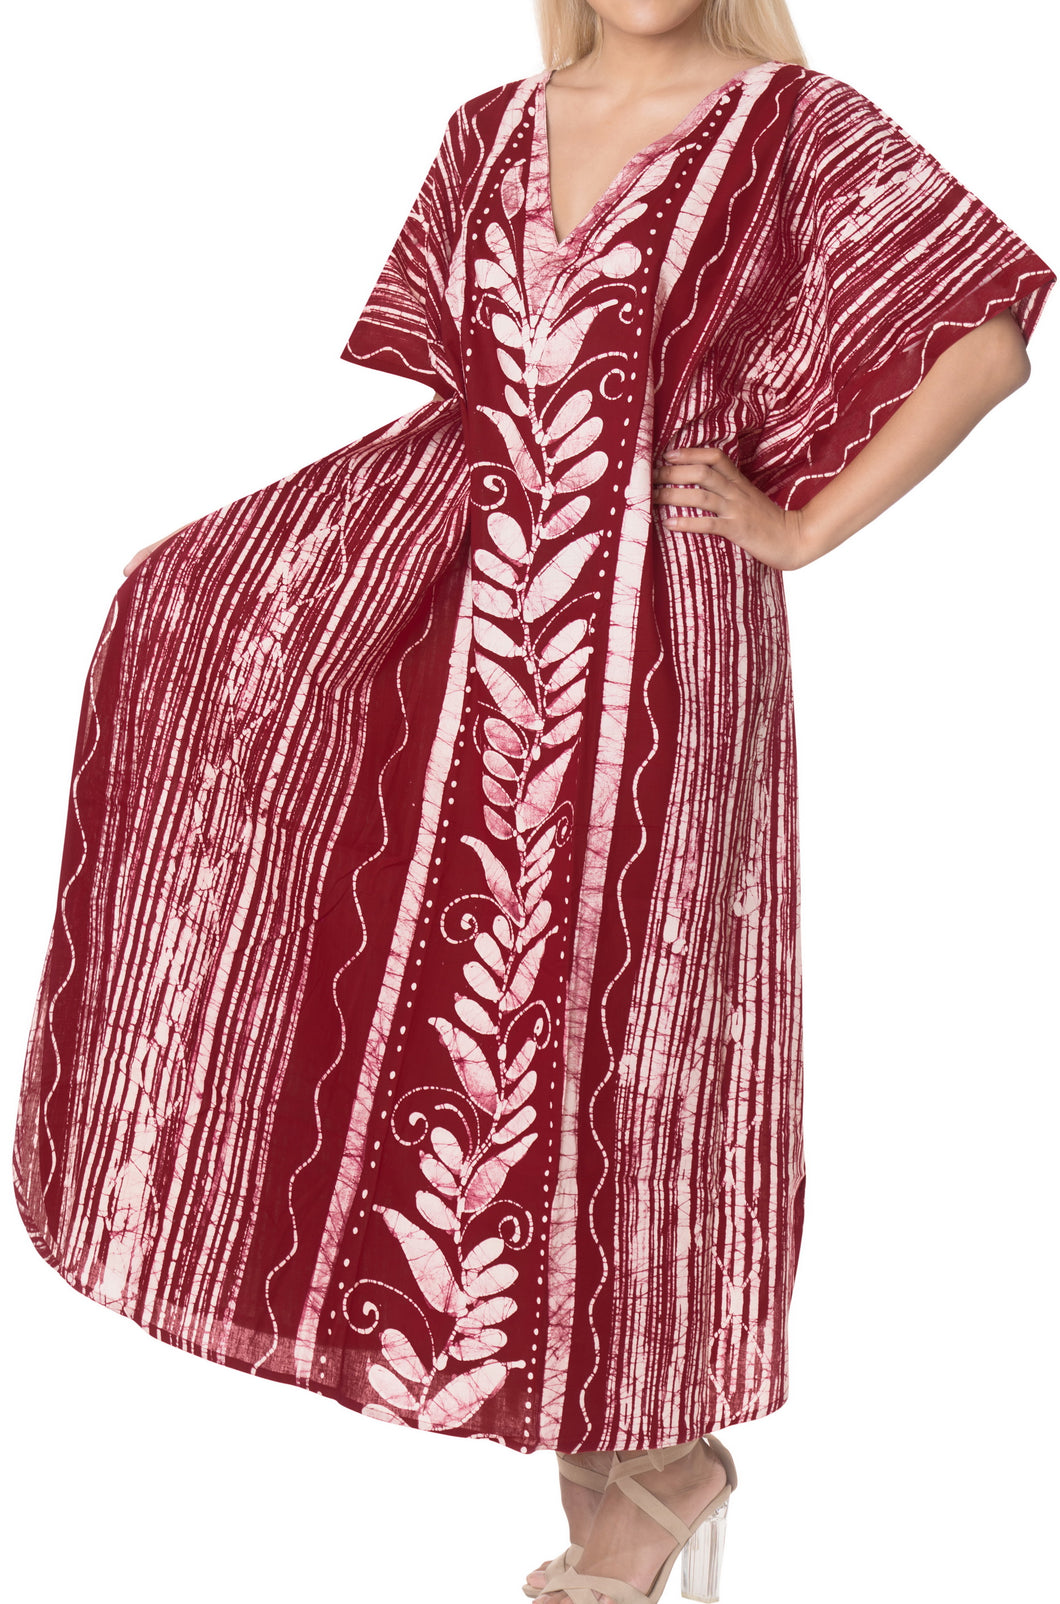 la-leela-100-cotton-batik-womens-kaftan-kimono-summer-beachwear-cover-up-dress-OSFM 14-18W [L- 2X]-Maroon_B40